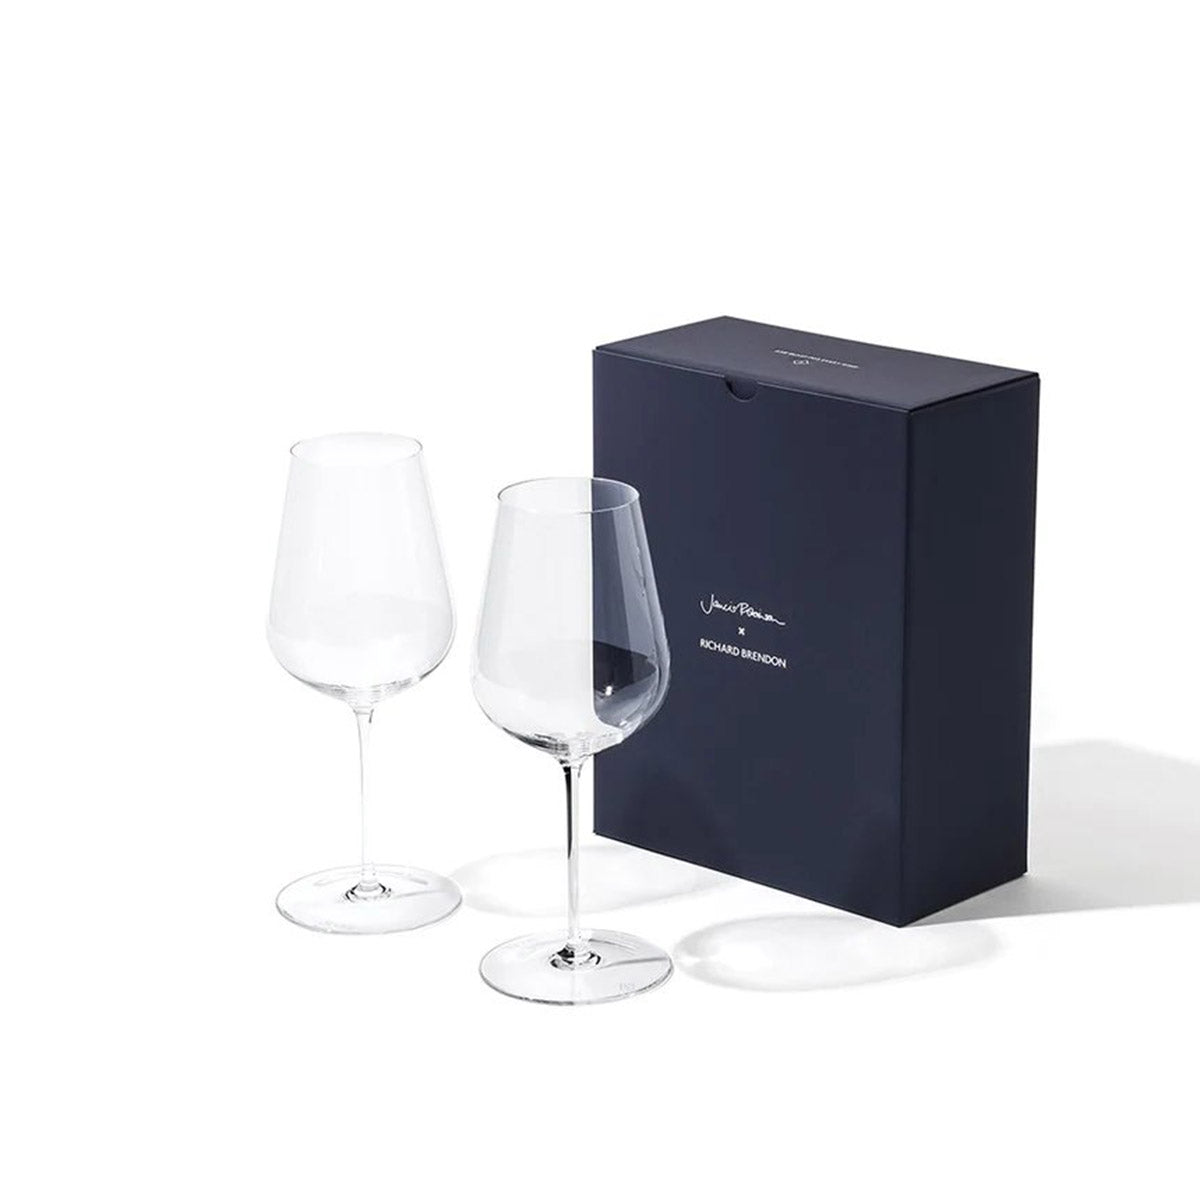 Richard Brendon Jancis Robinson Wine Glass - Set of 2